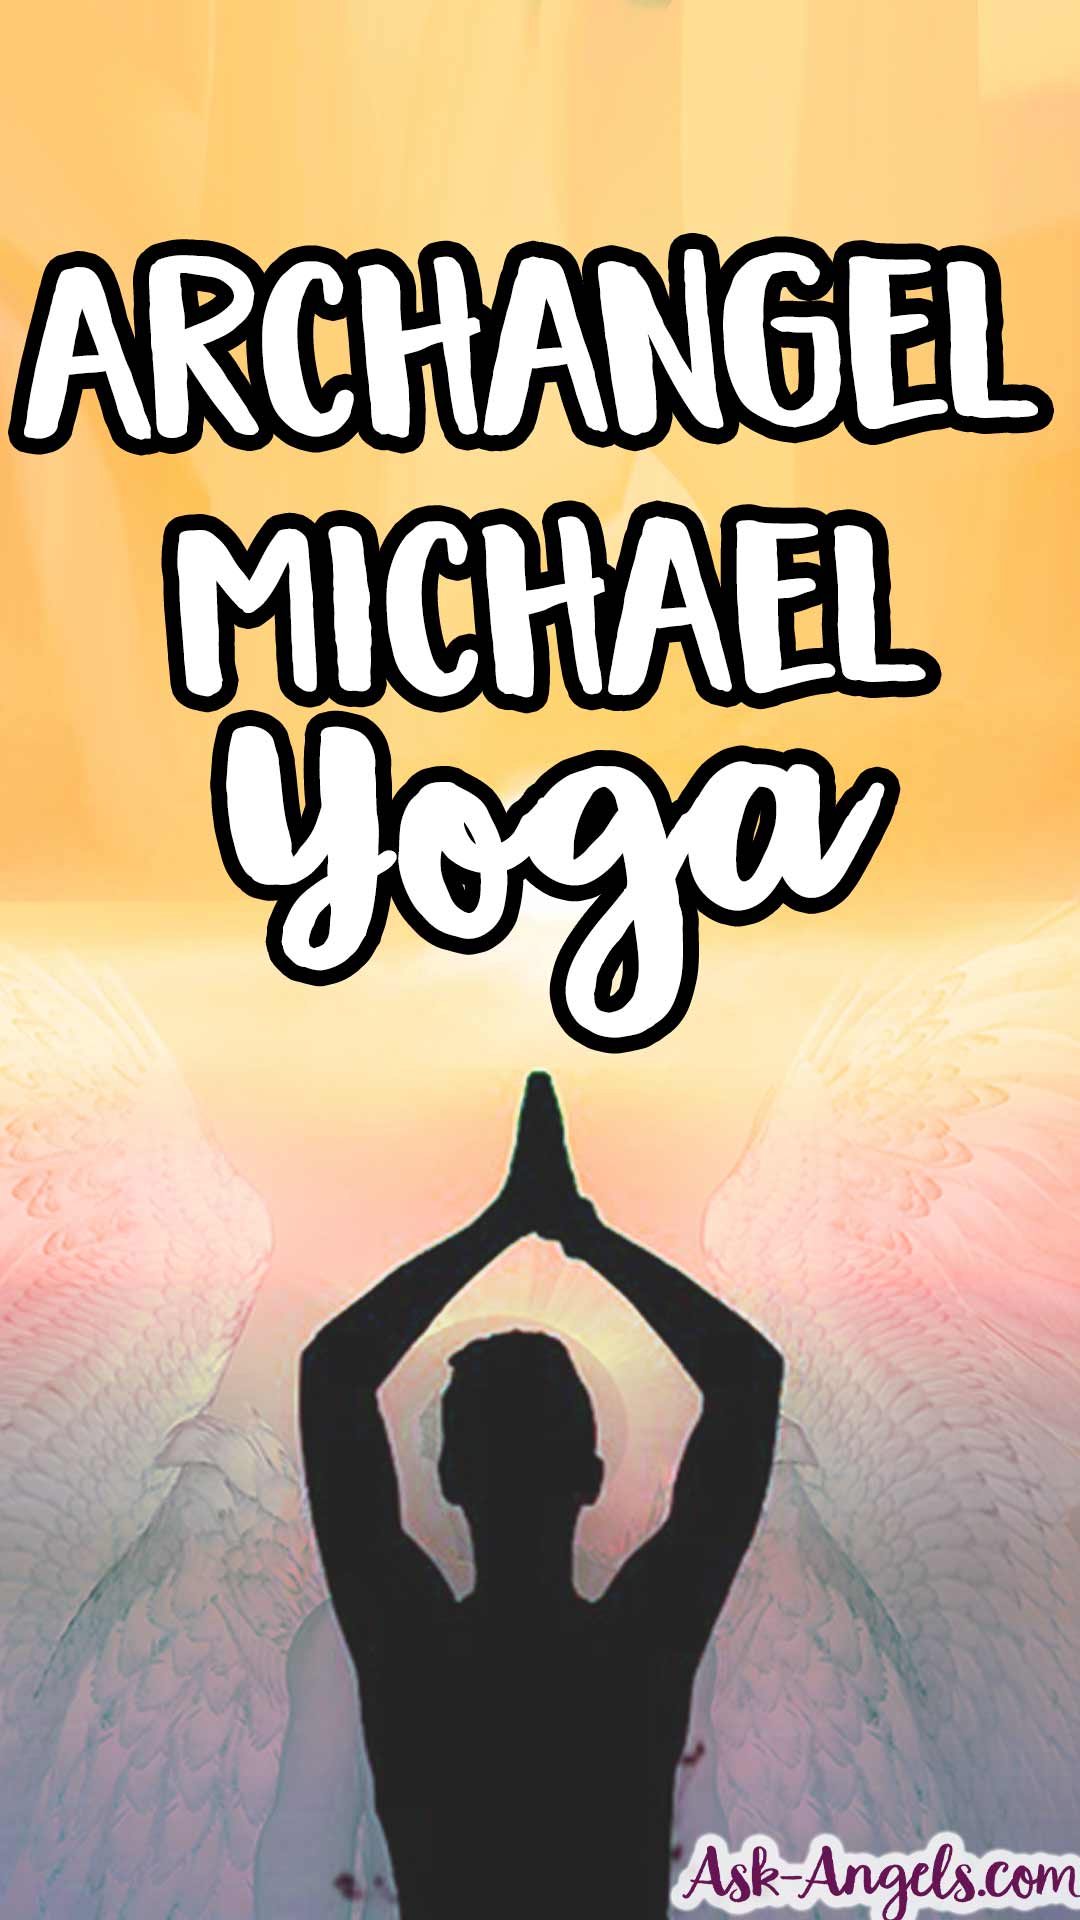 Archangel Michael Yoga - A Powerful Cognitive Yoga Practive